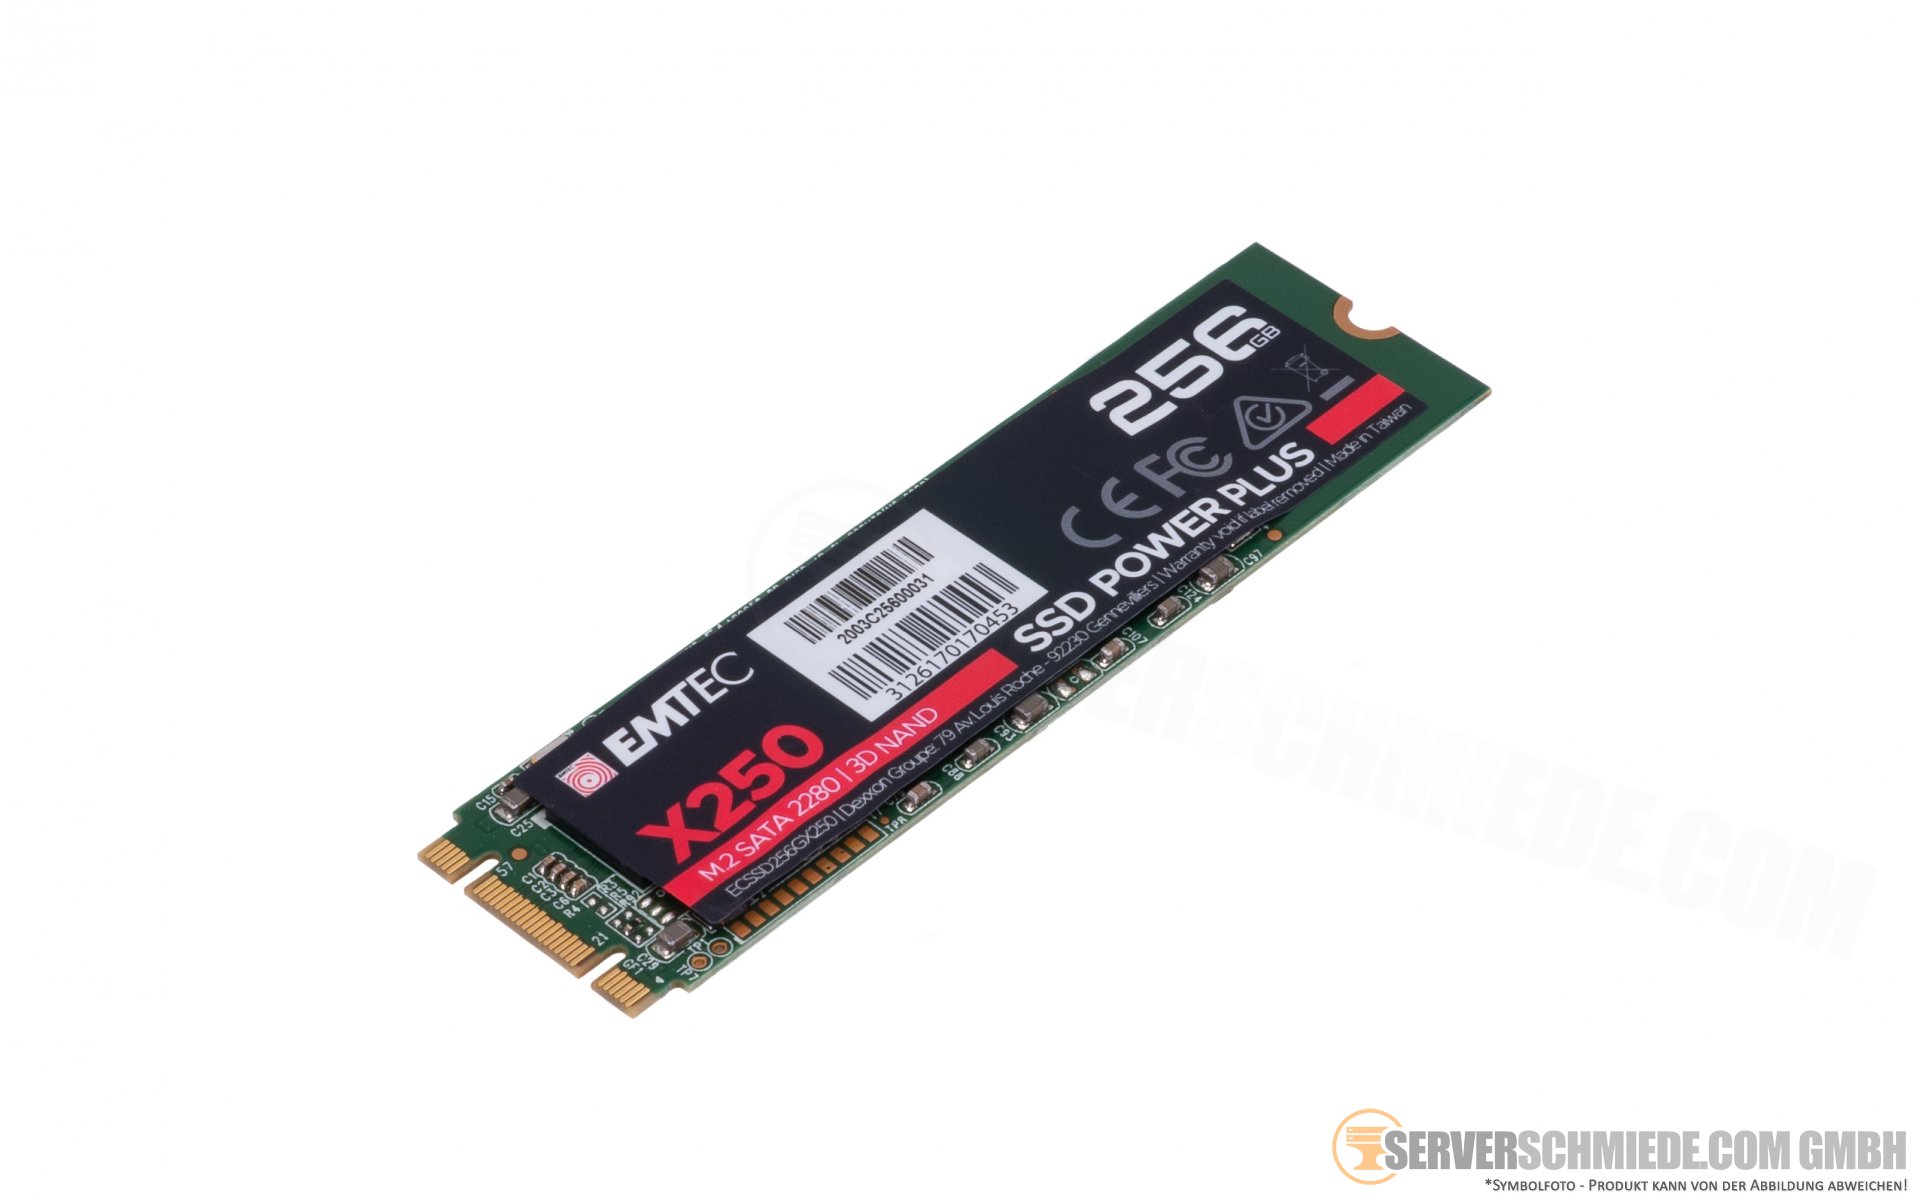 Dell 240GB SSD M.2 SATA 6Gbit/s Enhet - BOSS